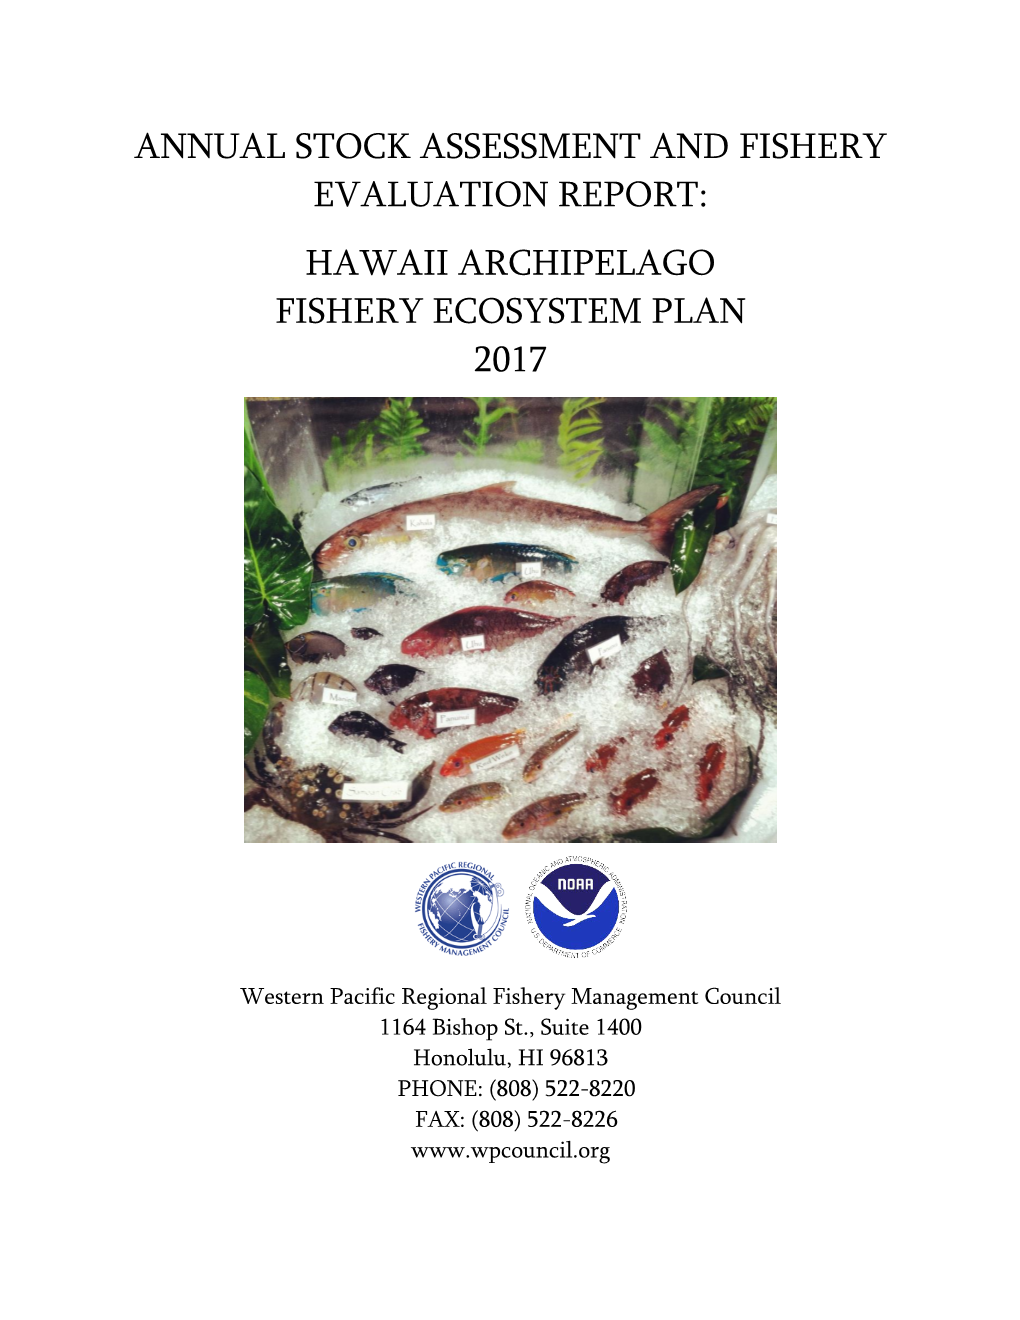 Hawaii Archipelago Fishery Ecosystem Plan 2017